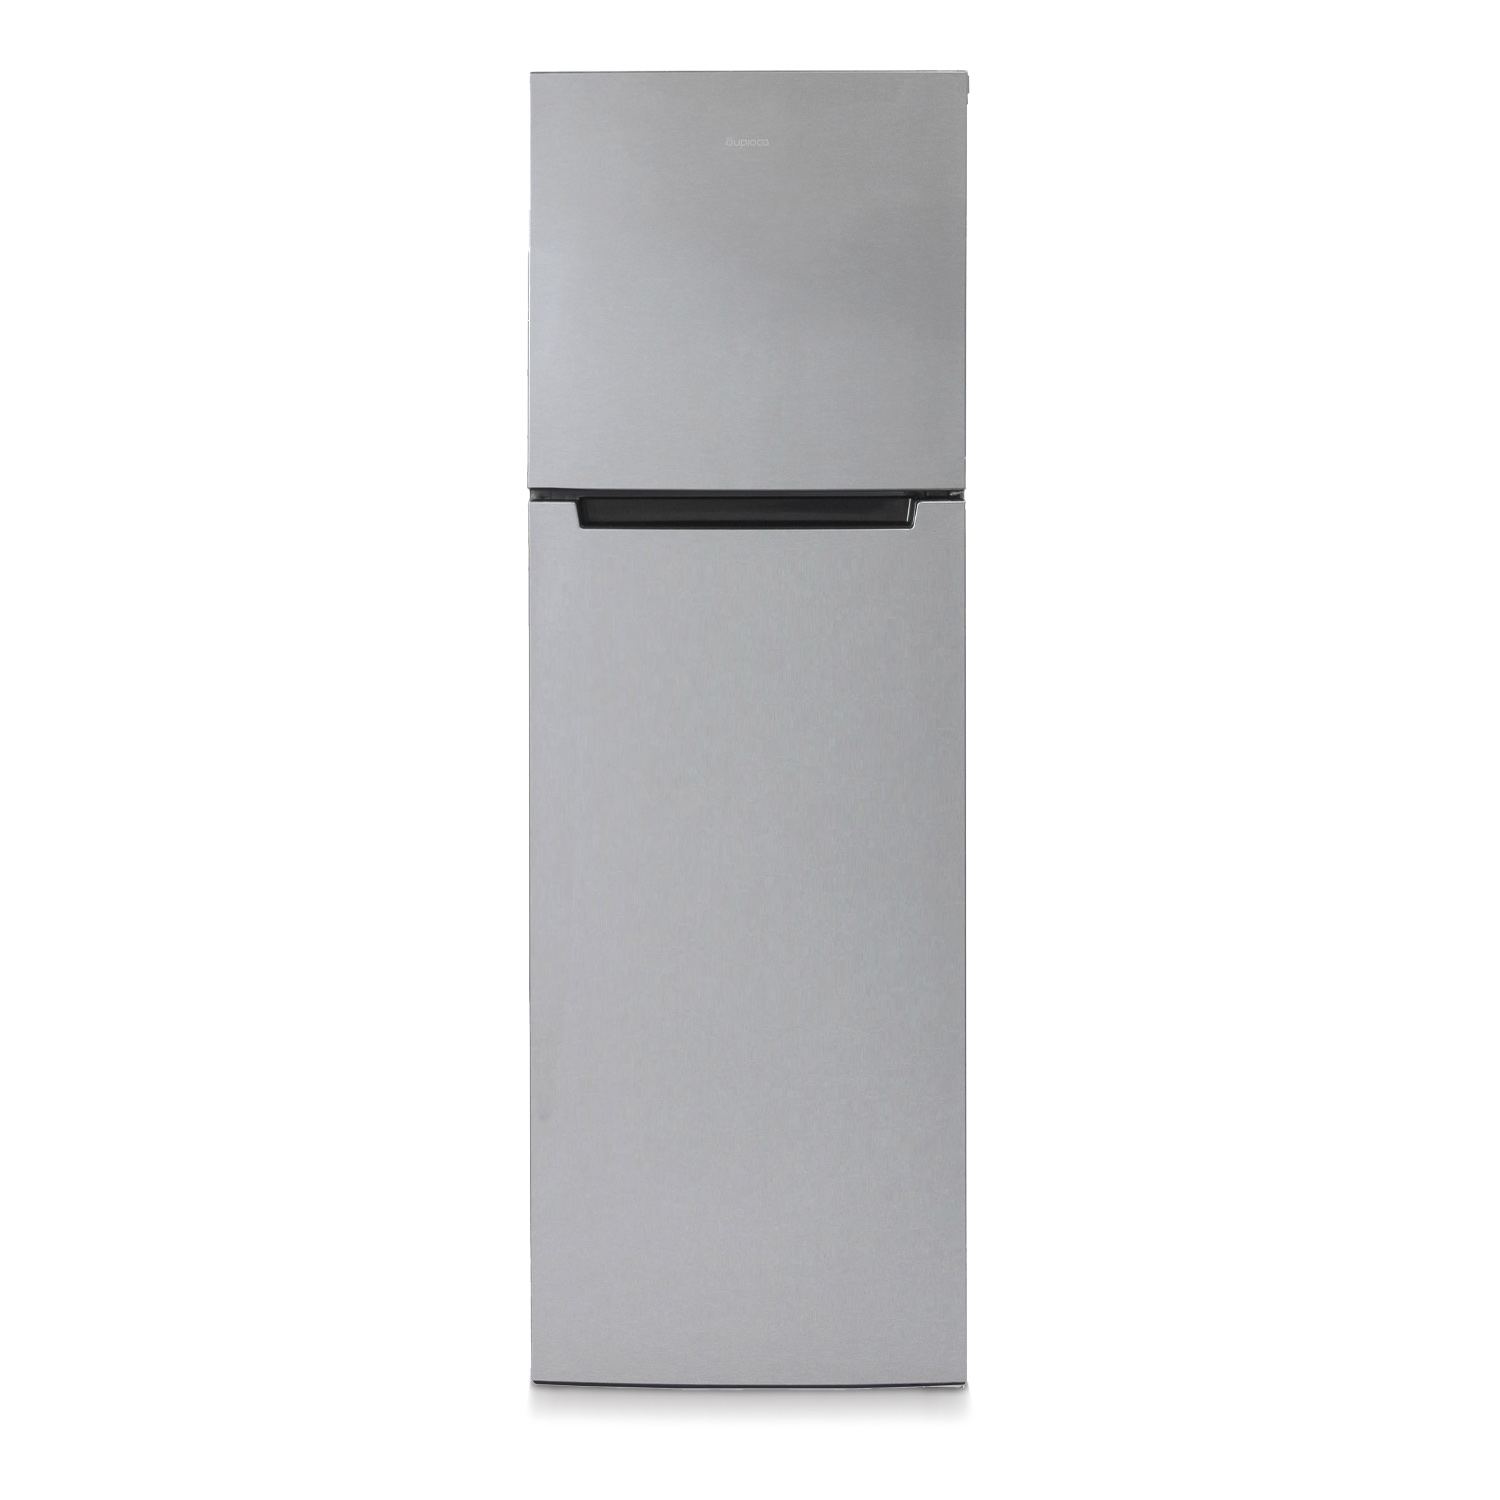 Холодильник Бирюса C6039 серебристый холодильник бирюса m110 серебристый